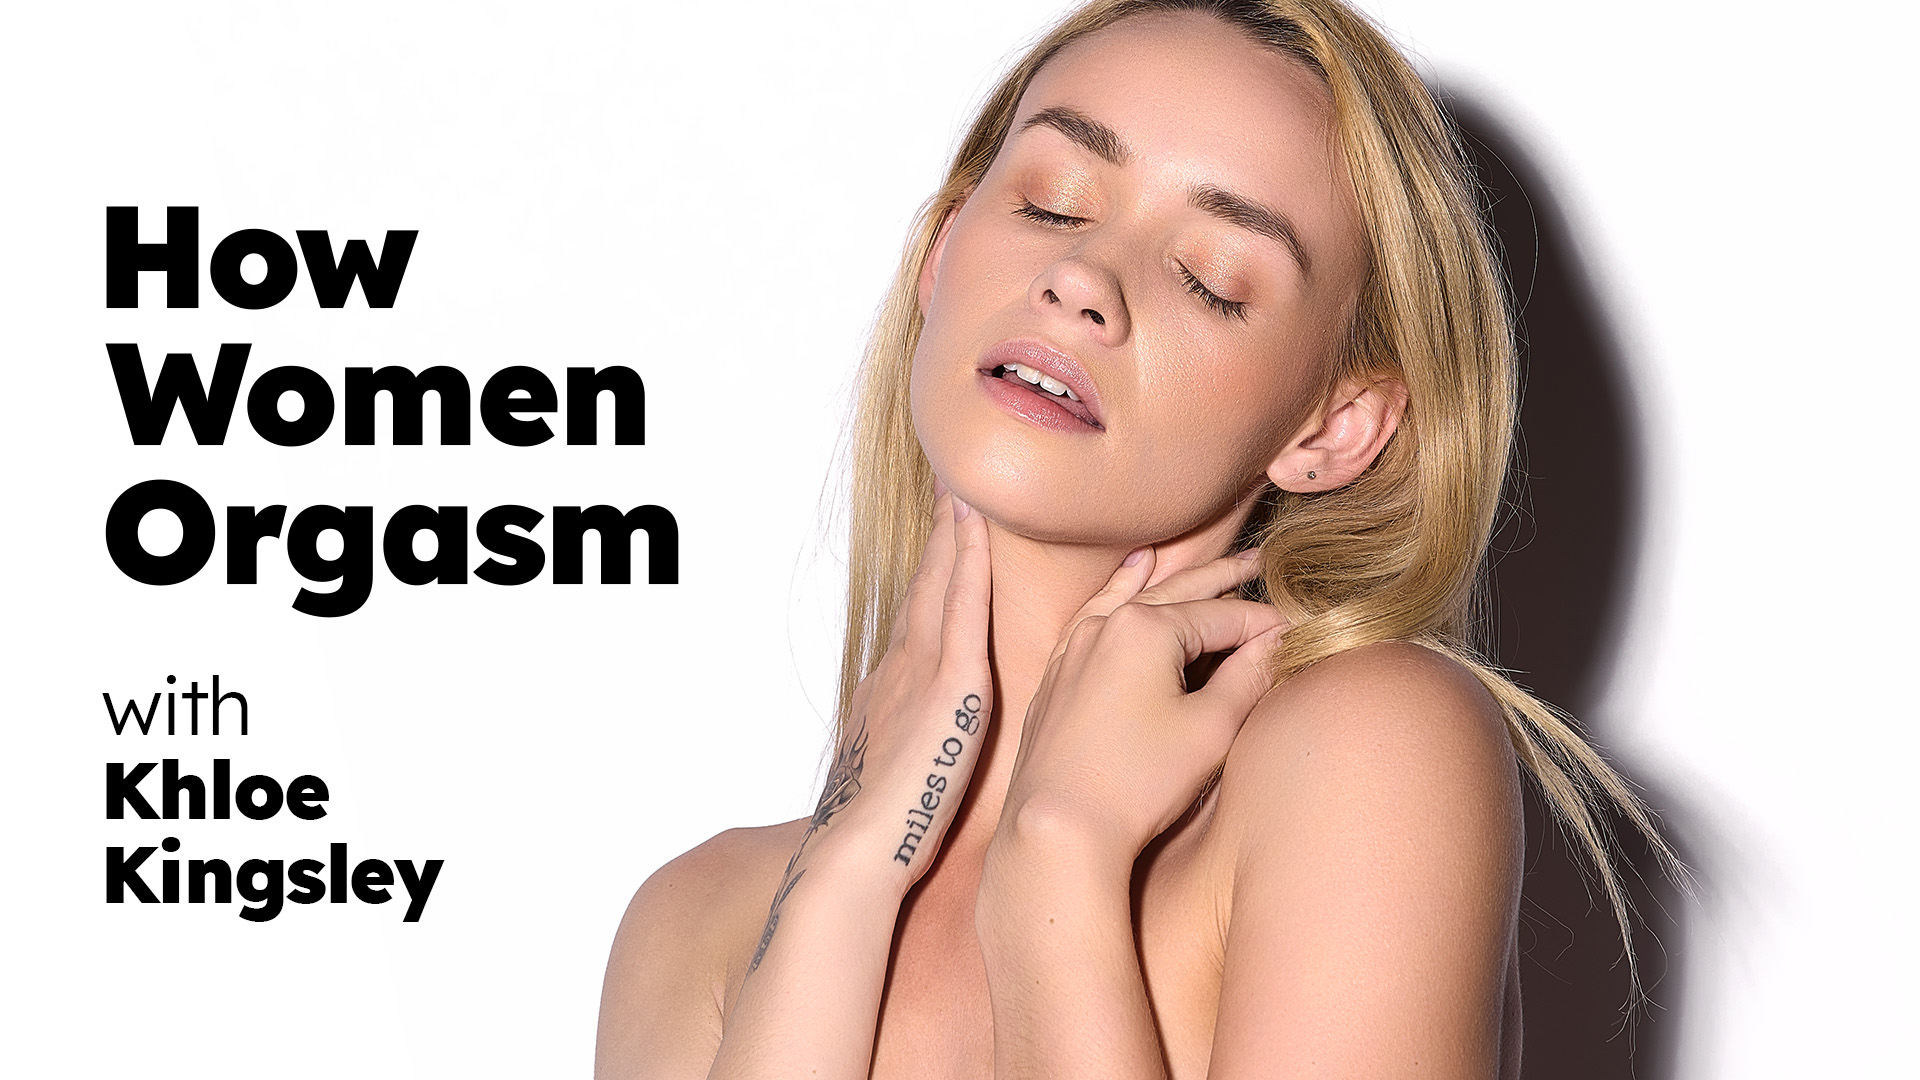 AdultTime UpClose Khloe Kingsley – How Women Orgasm – Khloe Kingsley